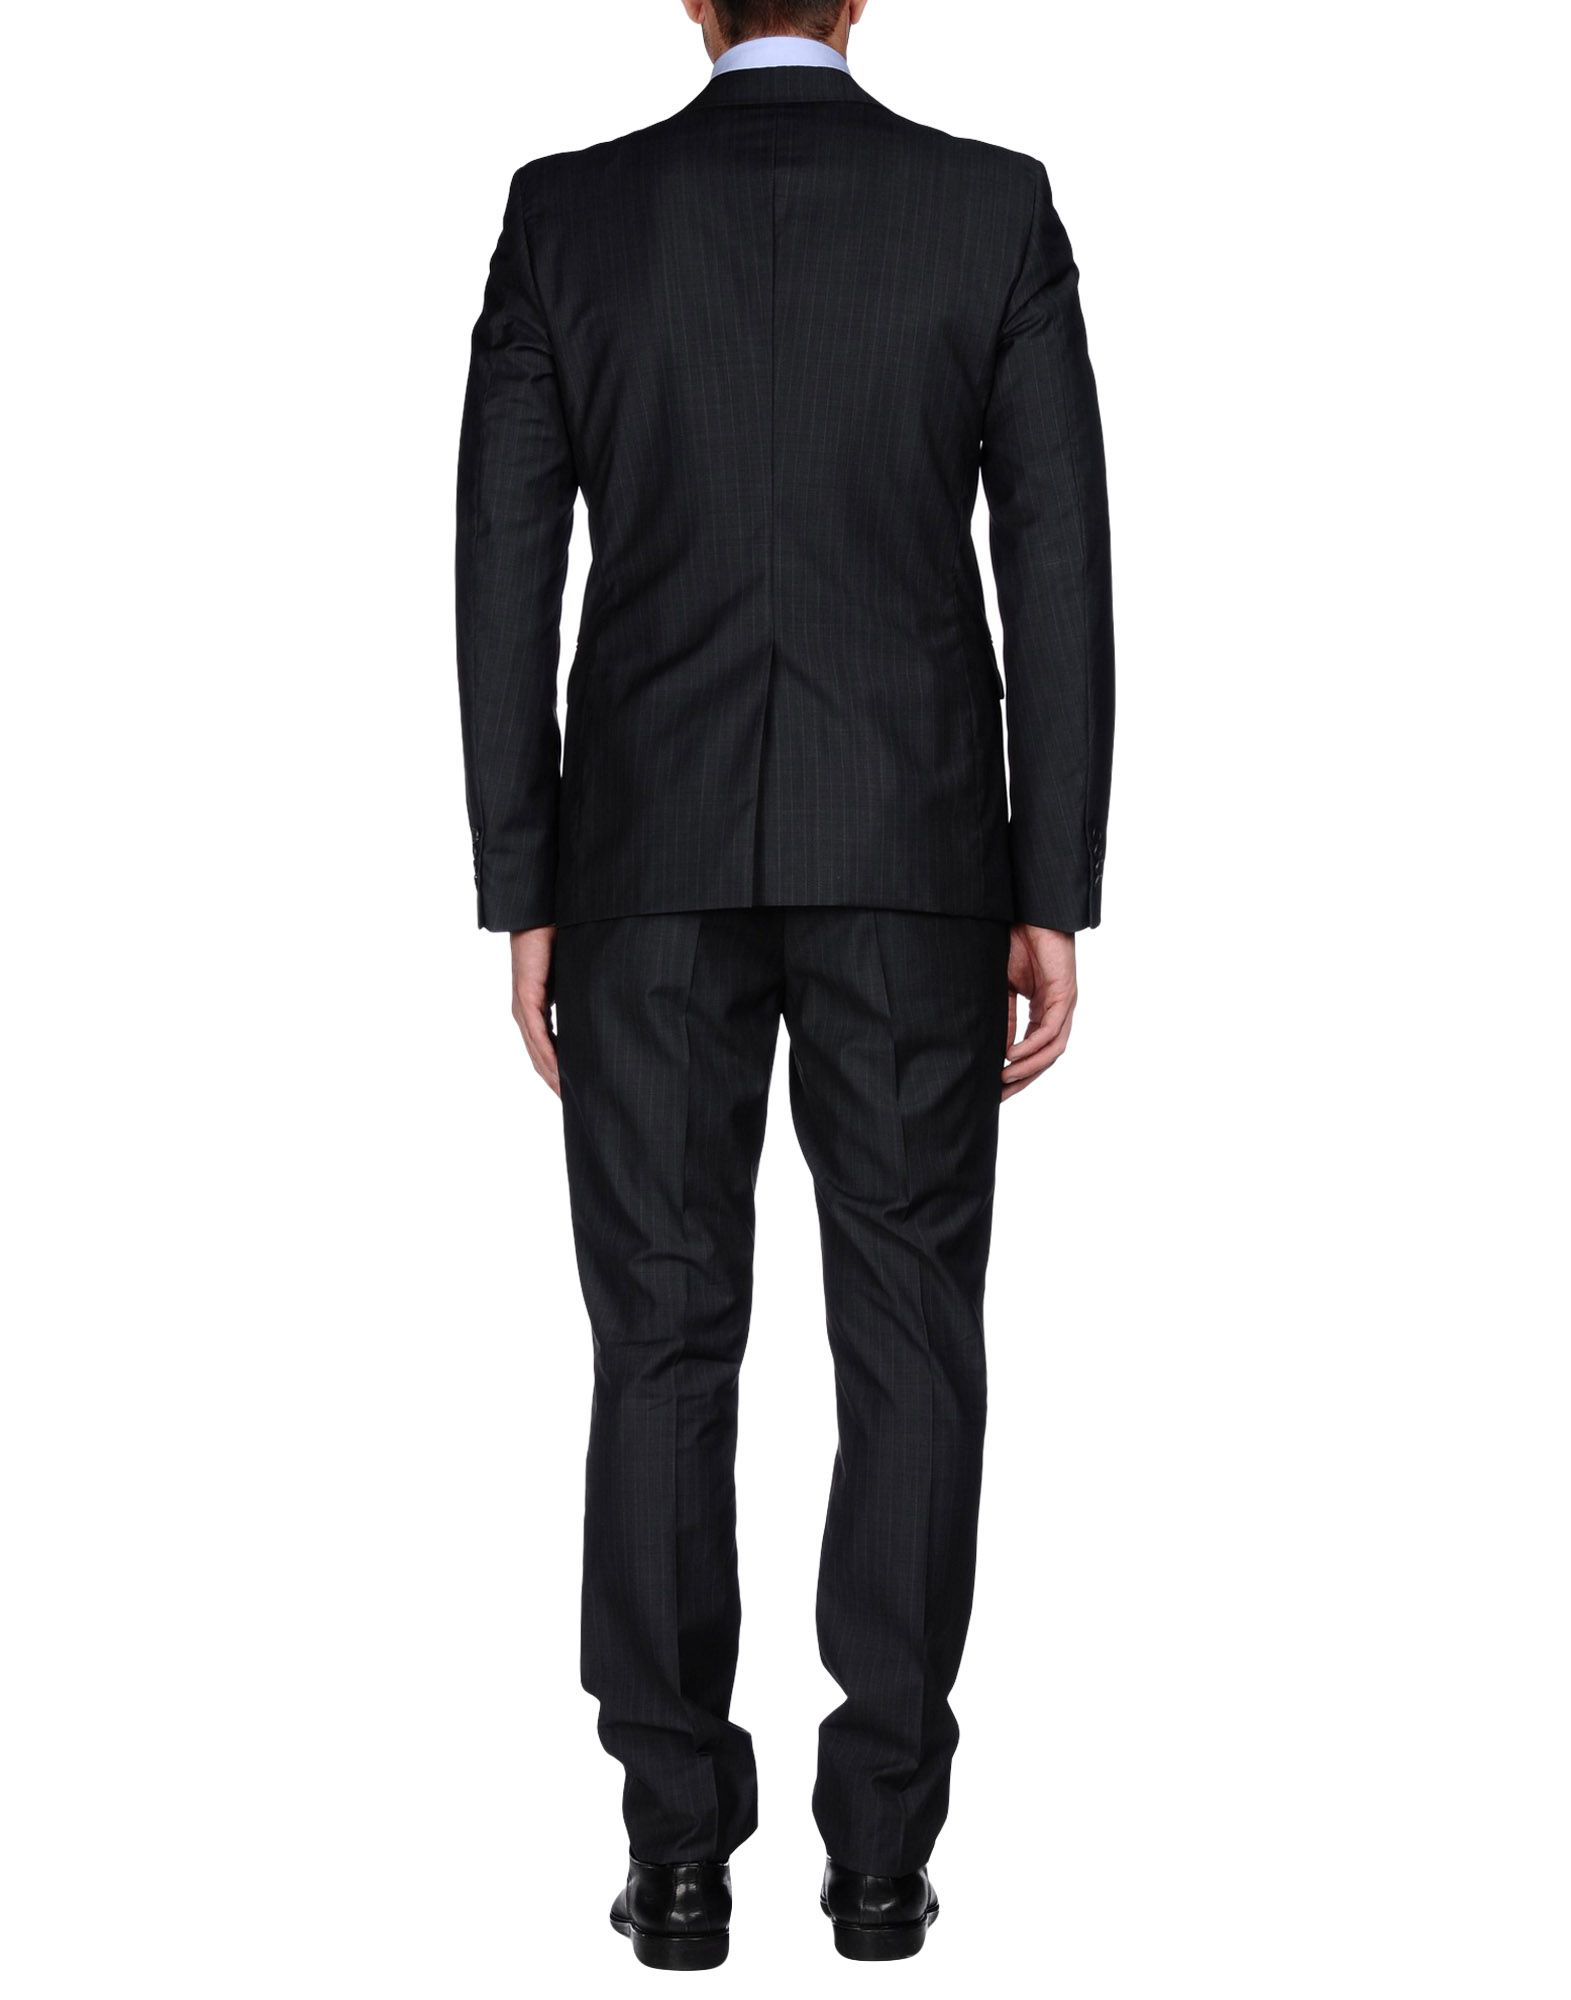 Lyst - Prada Suit in Gray for Men